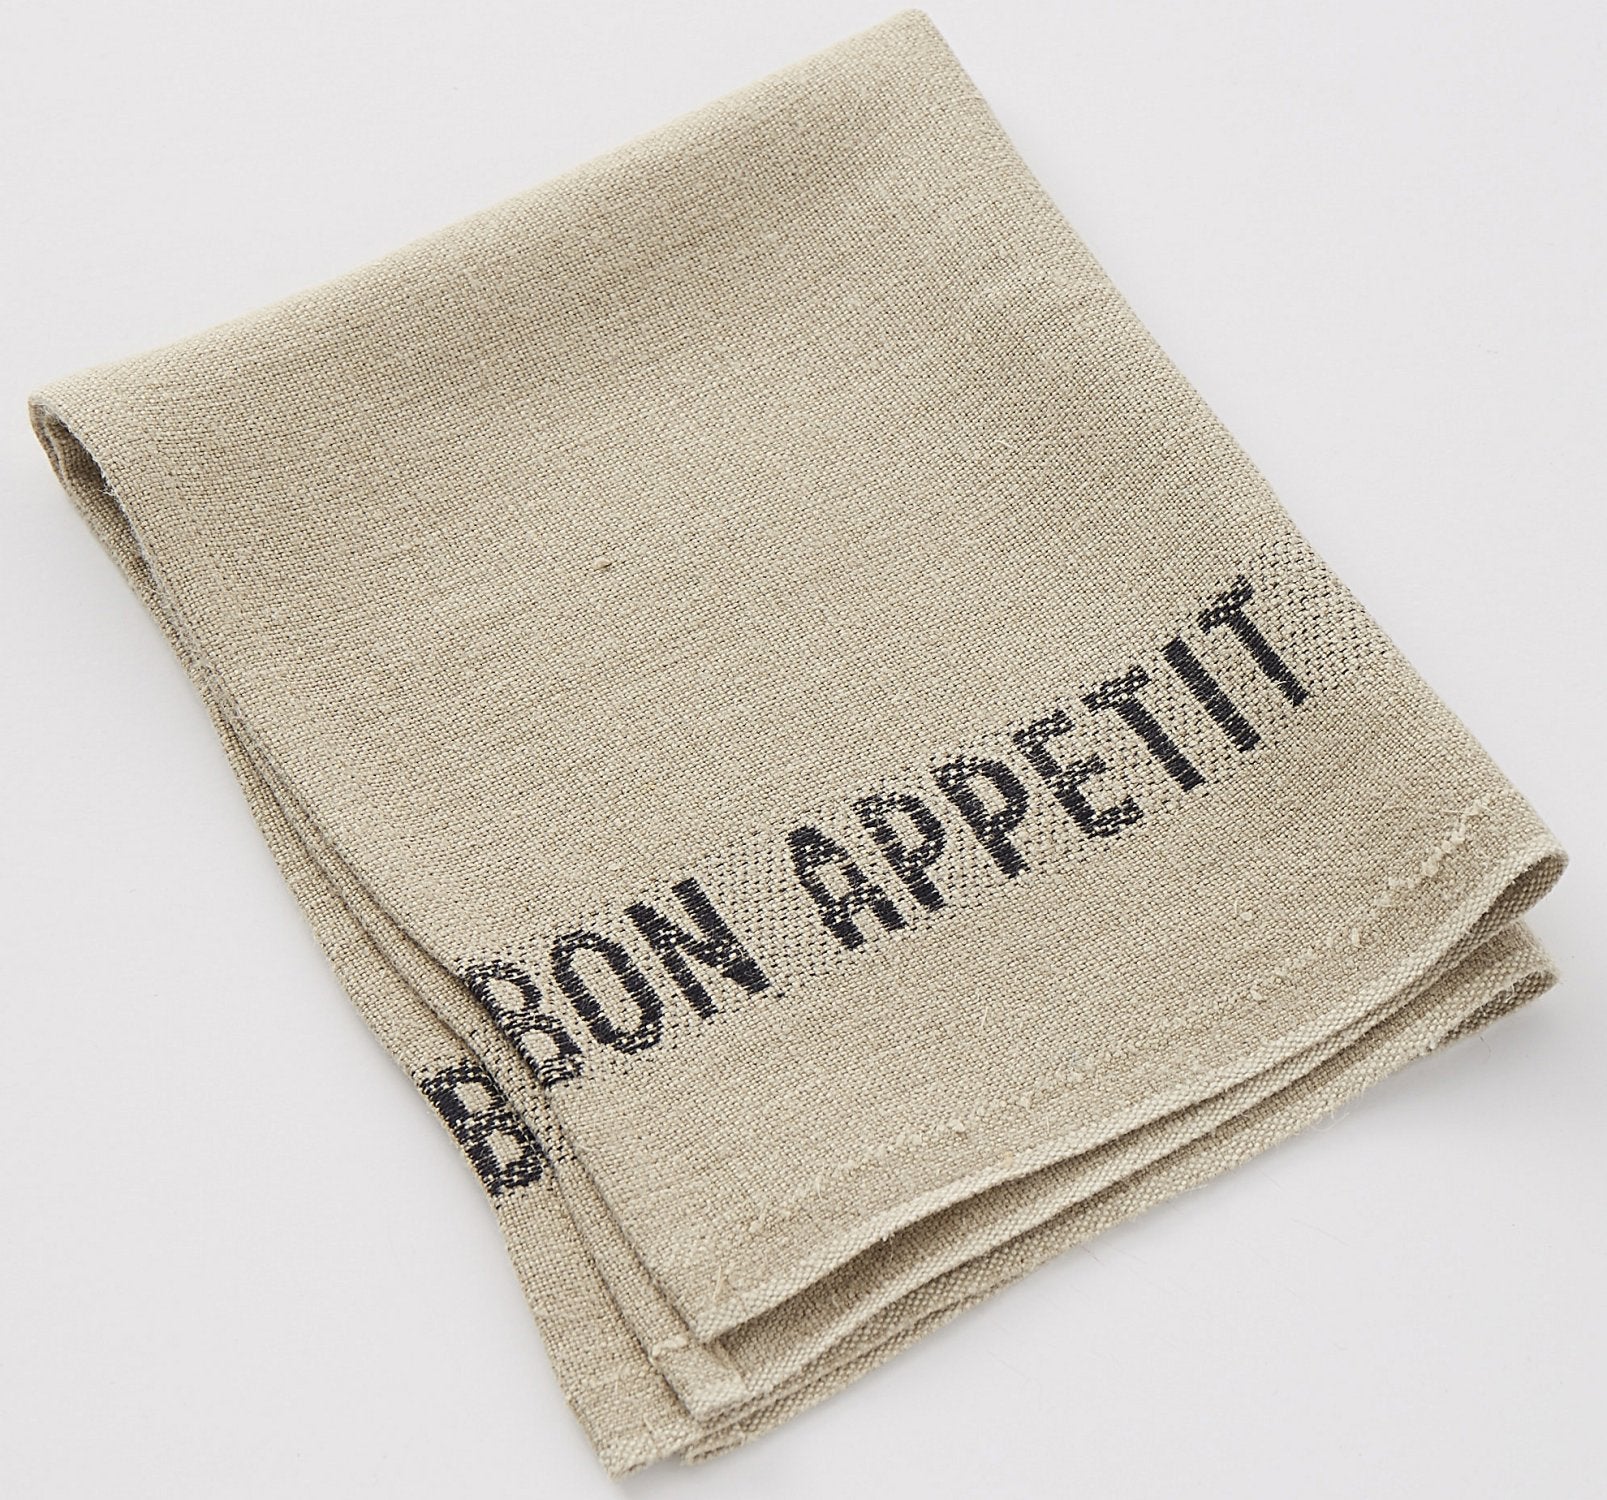 Charvet Editions "Bon Appetit" (Black), Natural woven linen napkin. Made in France.